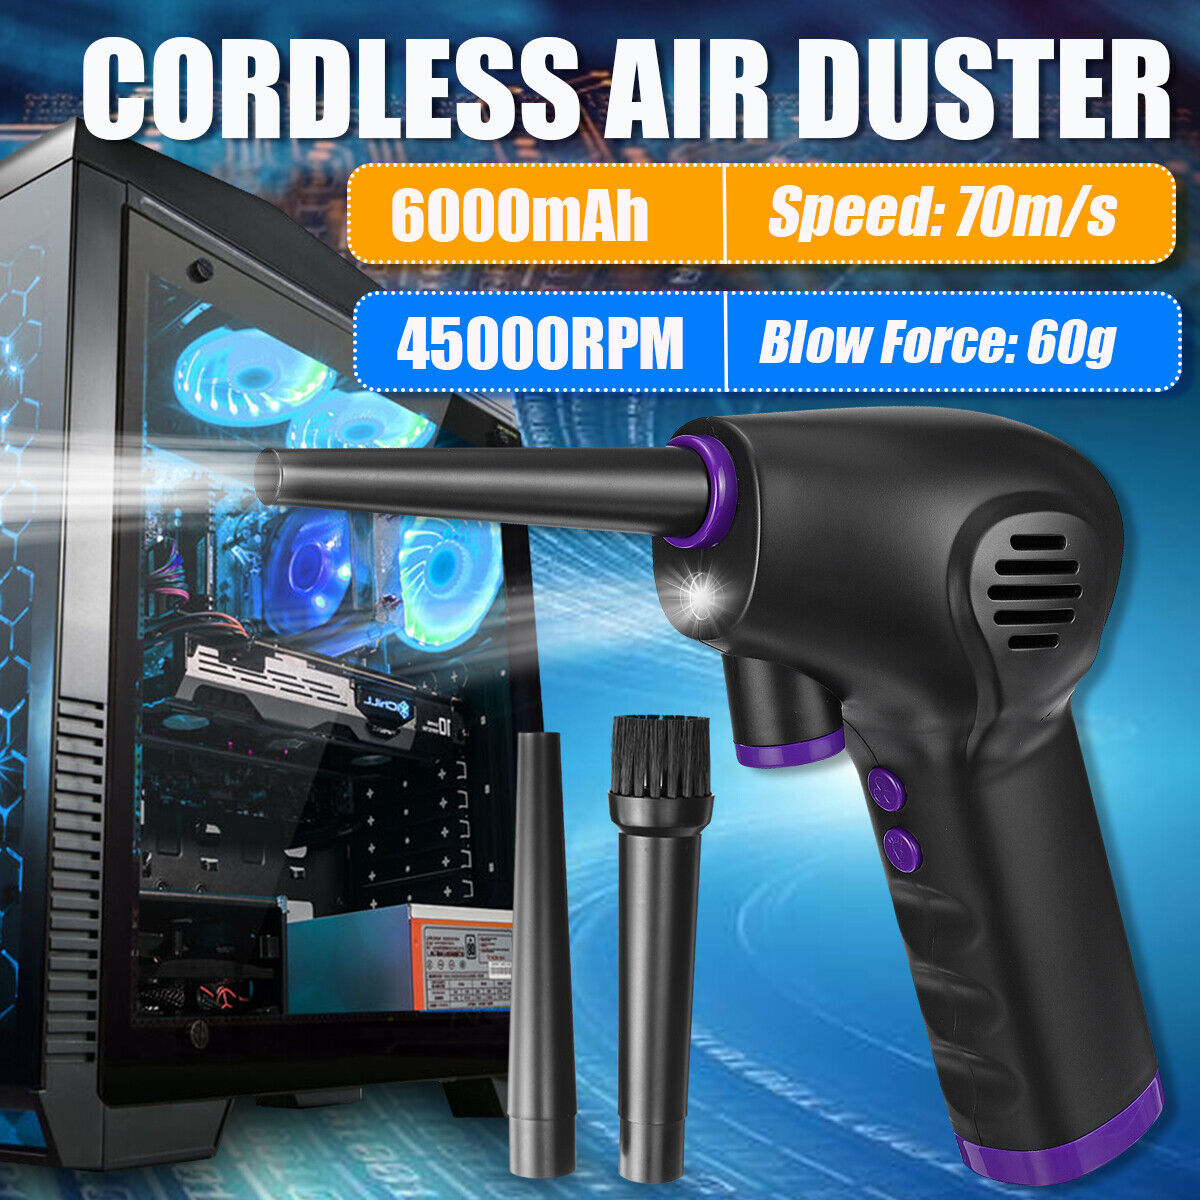 Cordless Air Duster